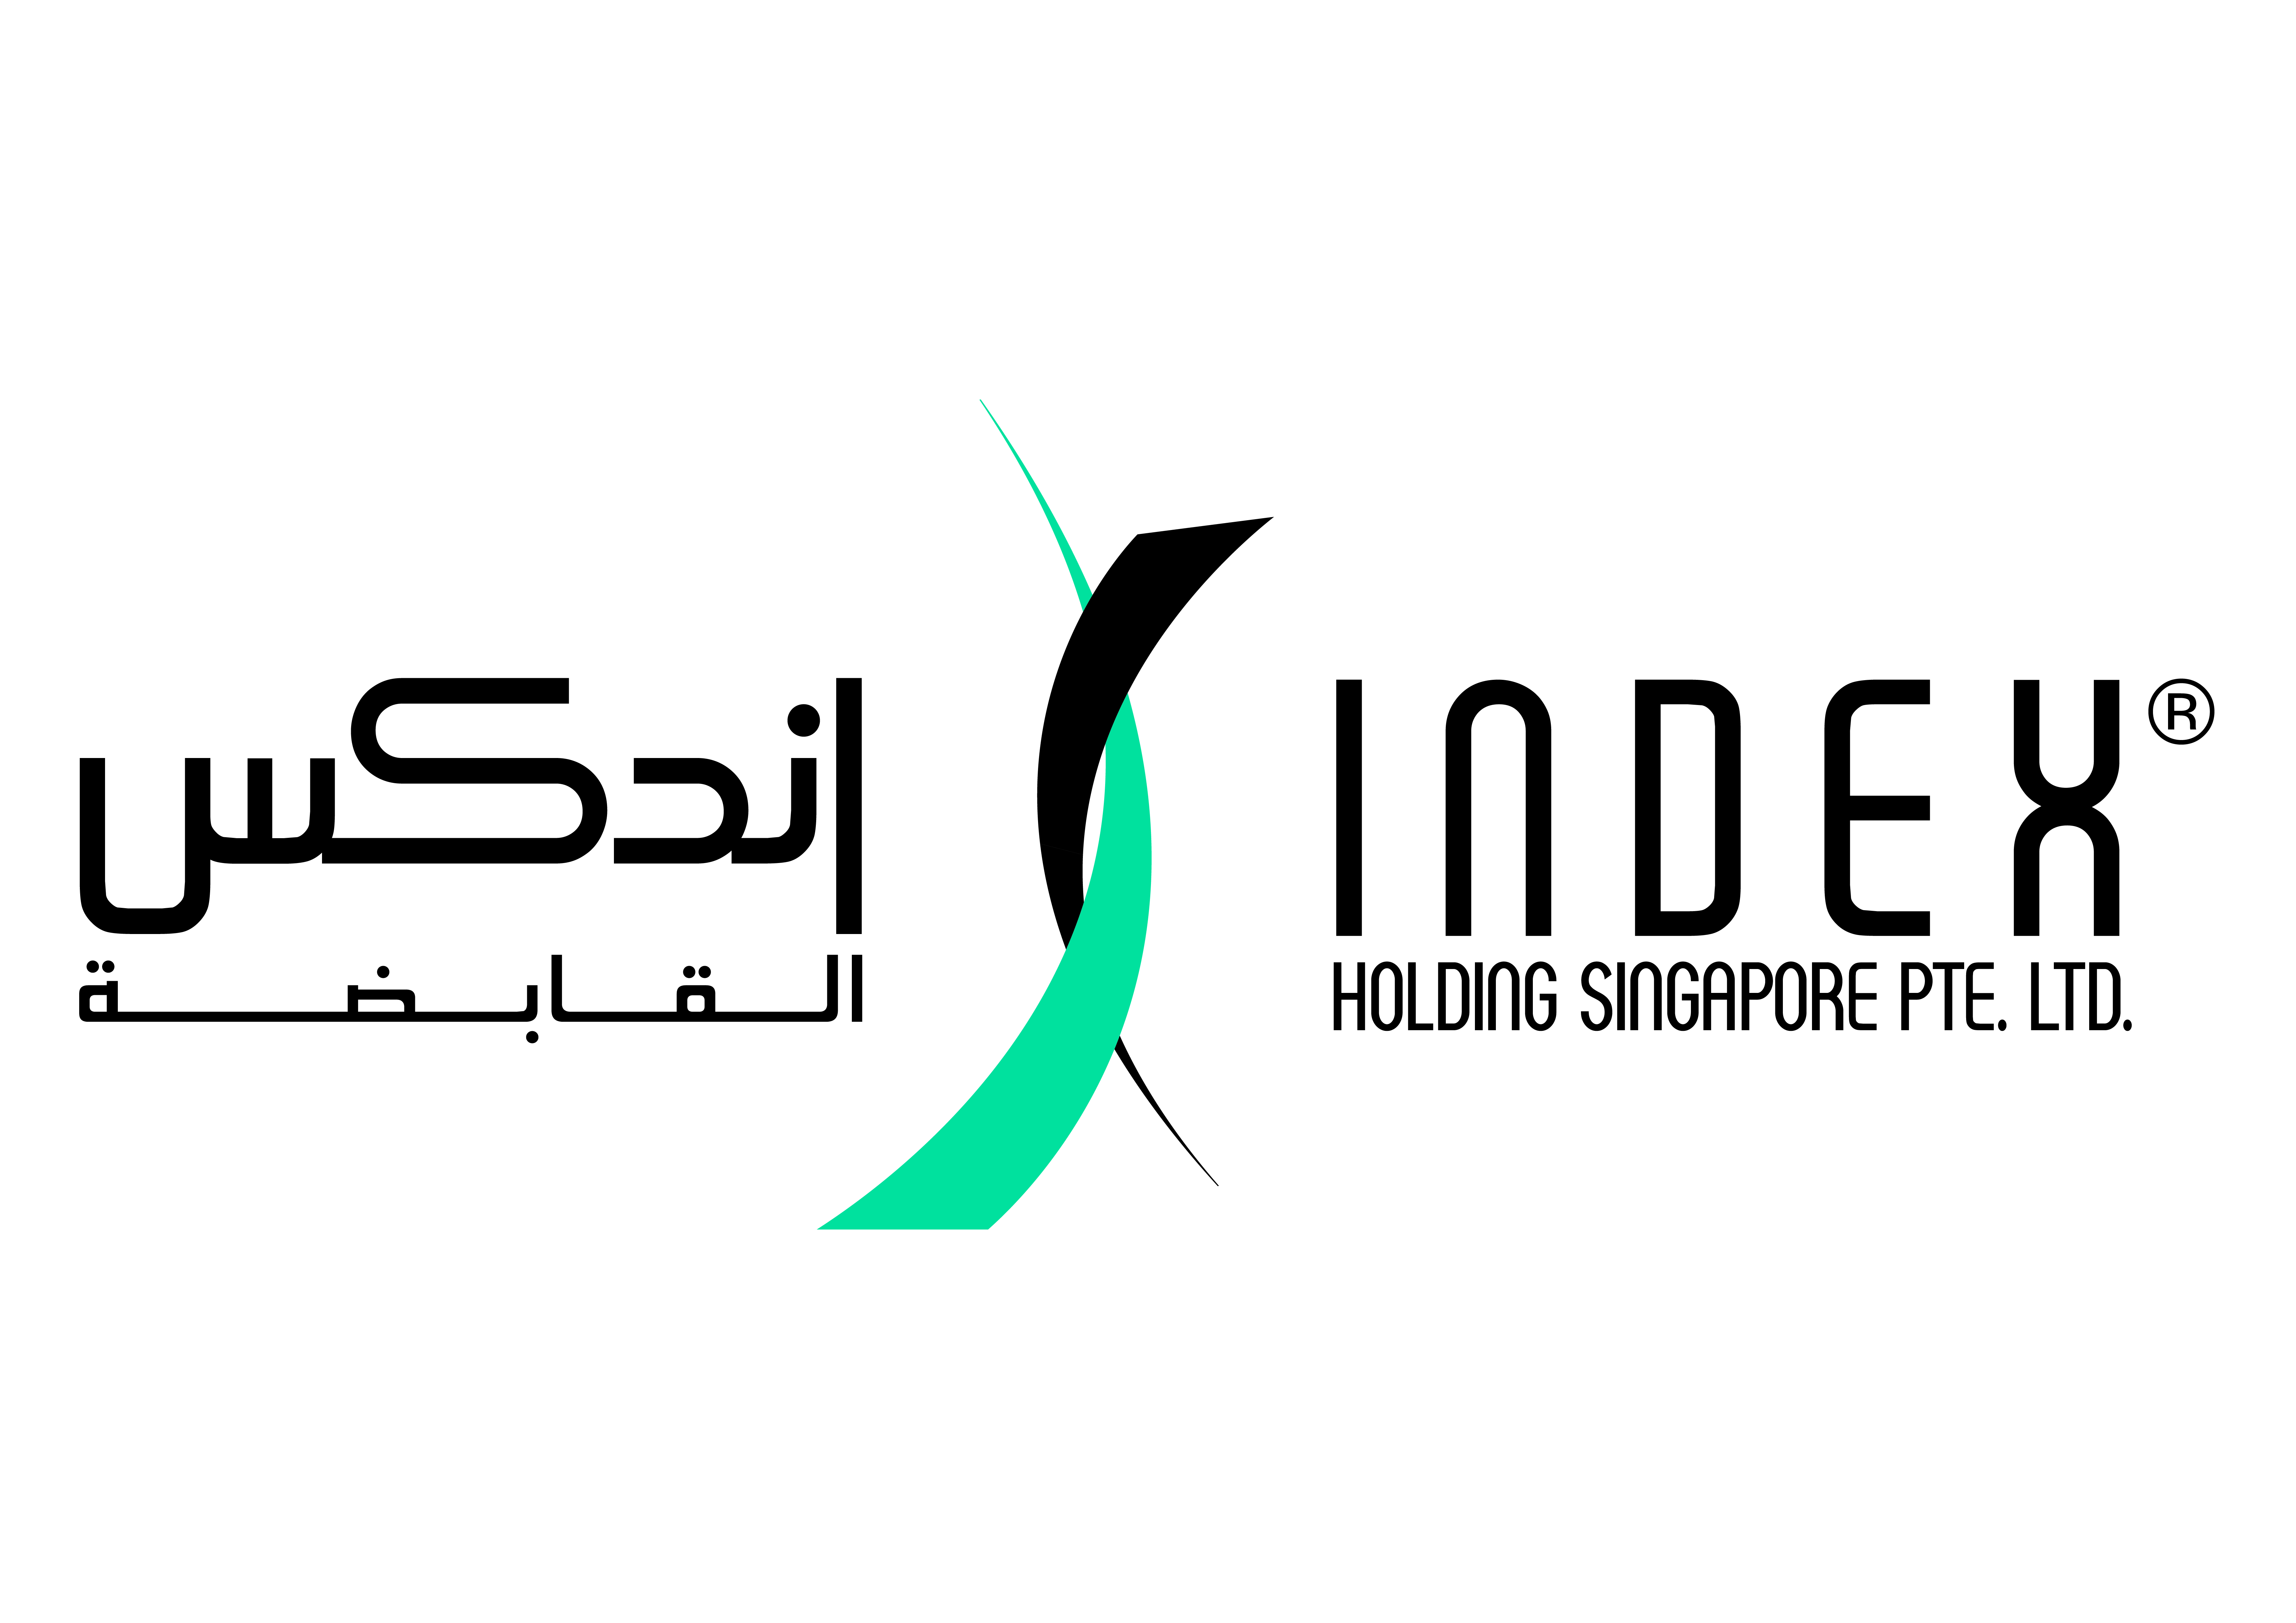 INDEX HOLDING Singapore Pte Ltd